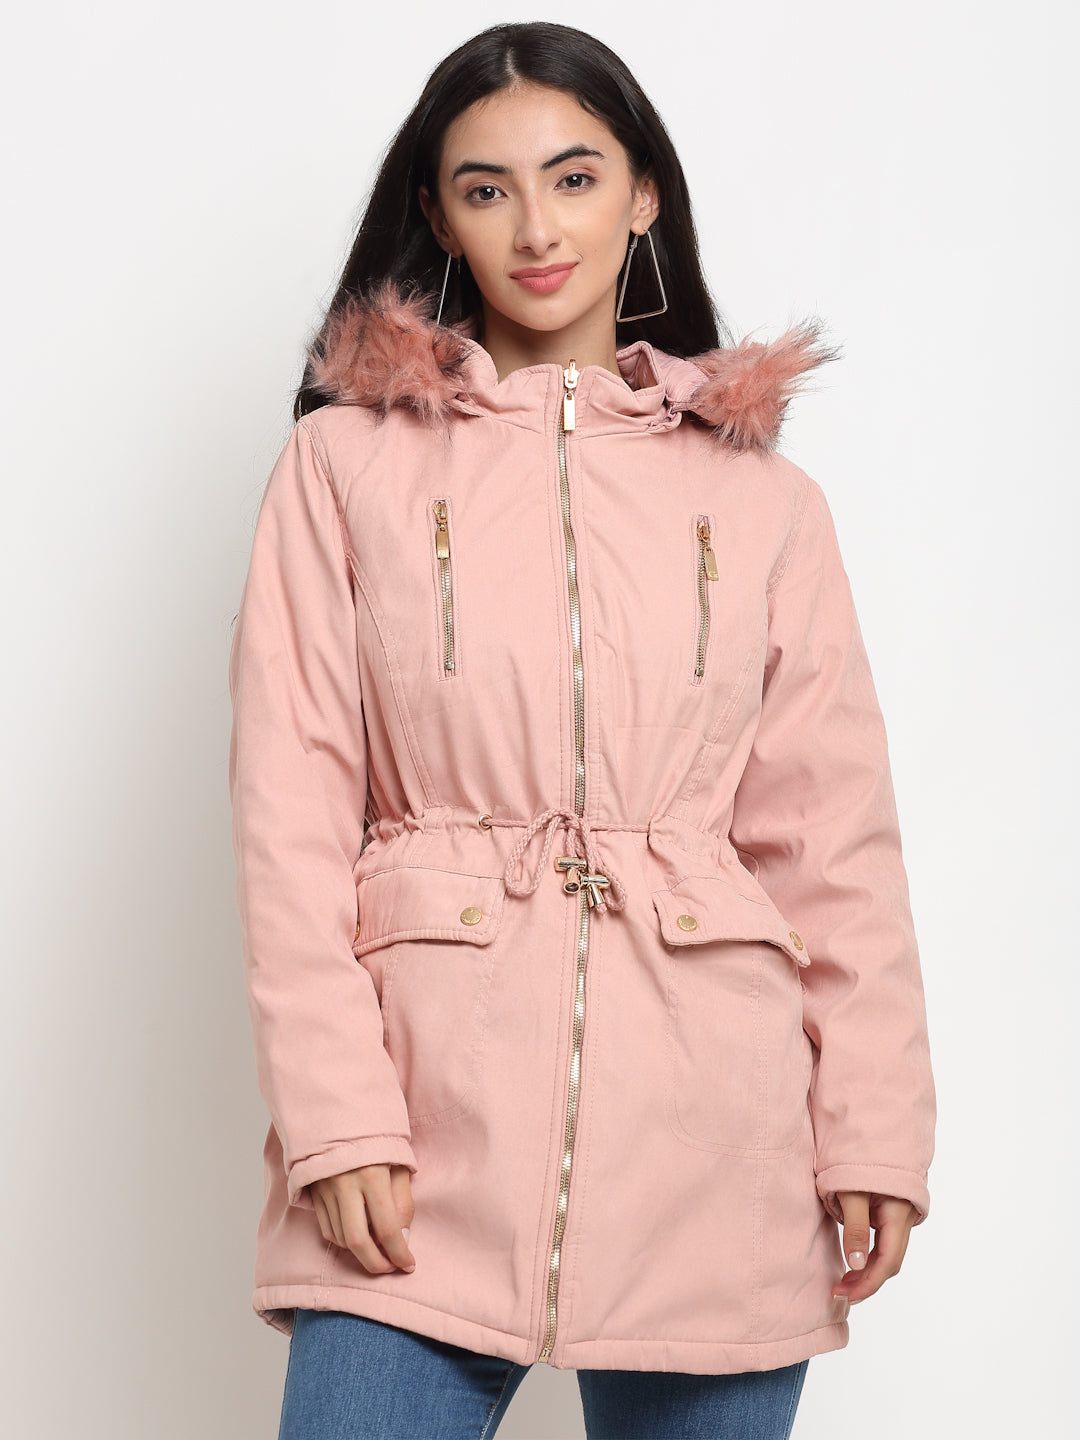 A Unique Women Pink Solid Hood Reversible Jacket 